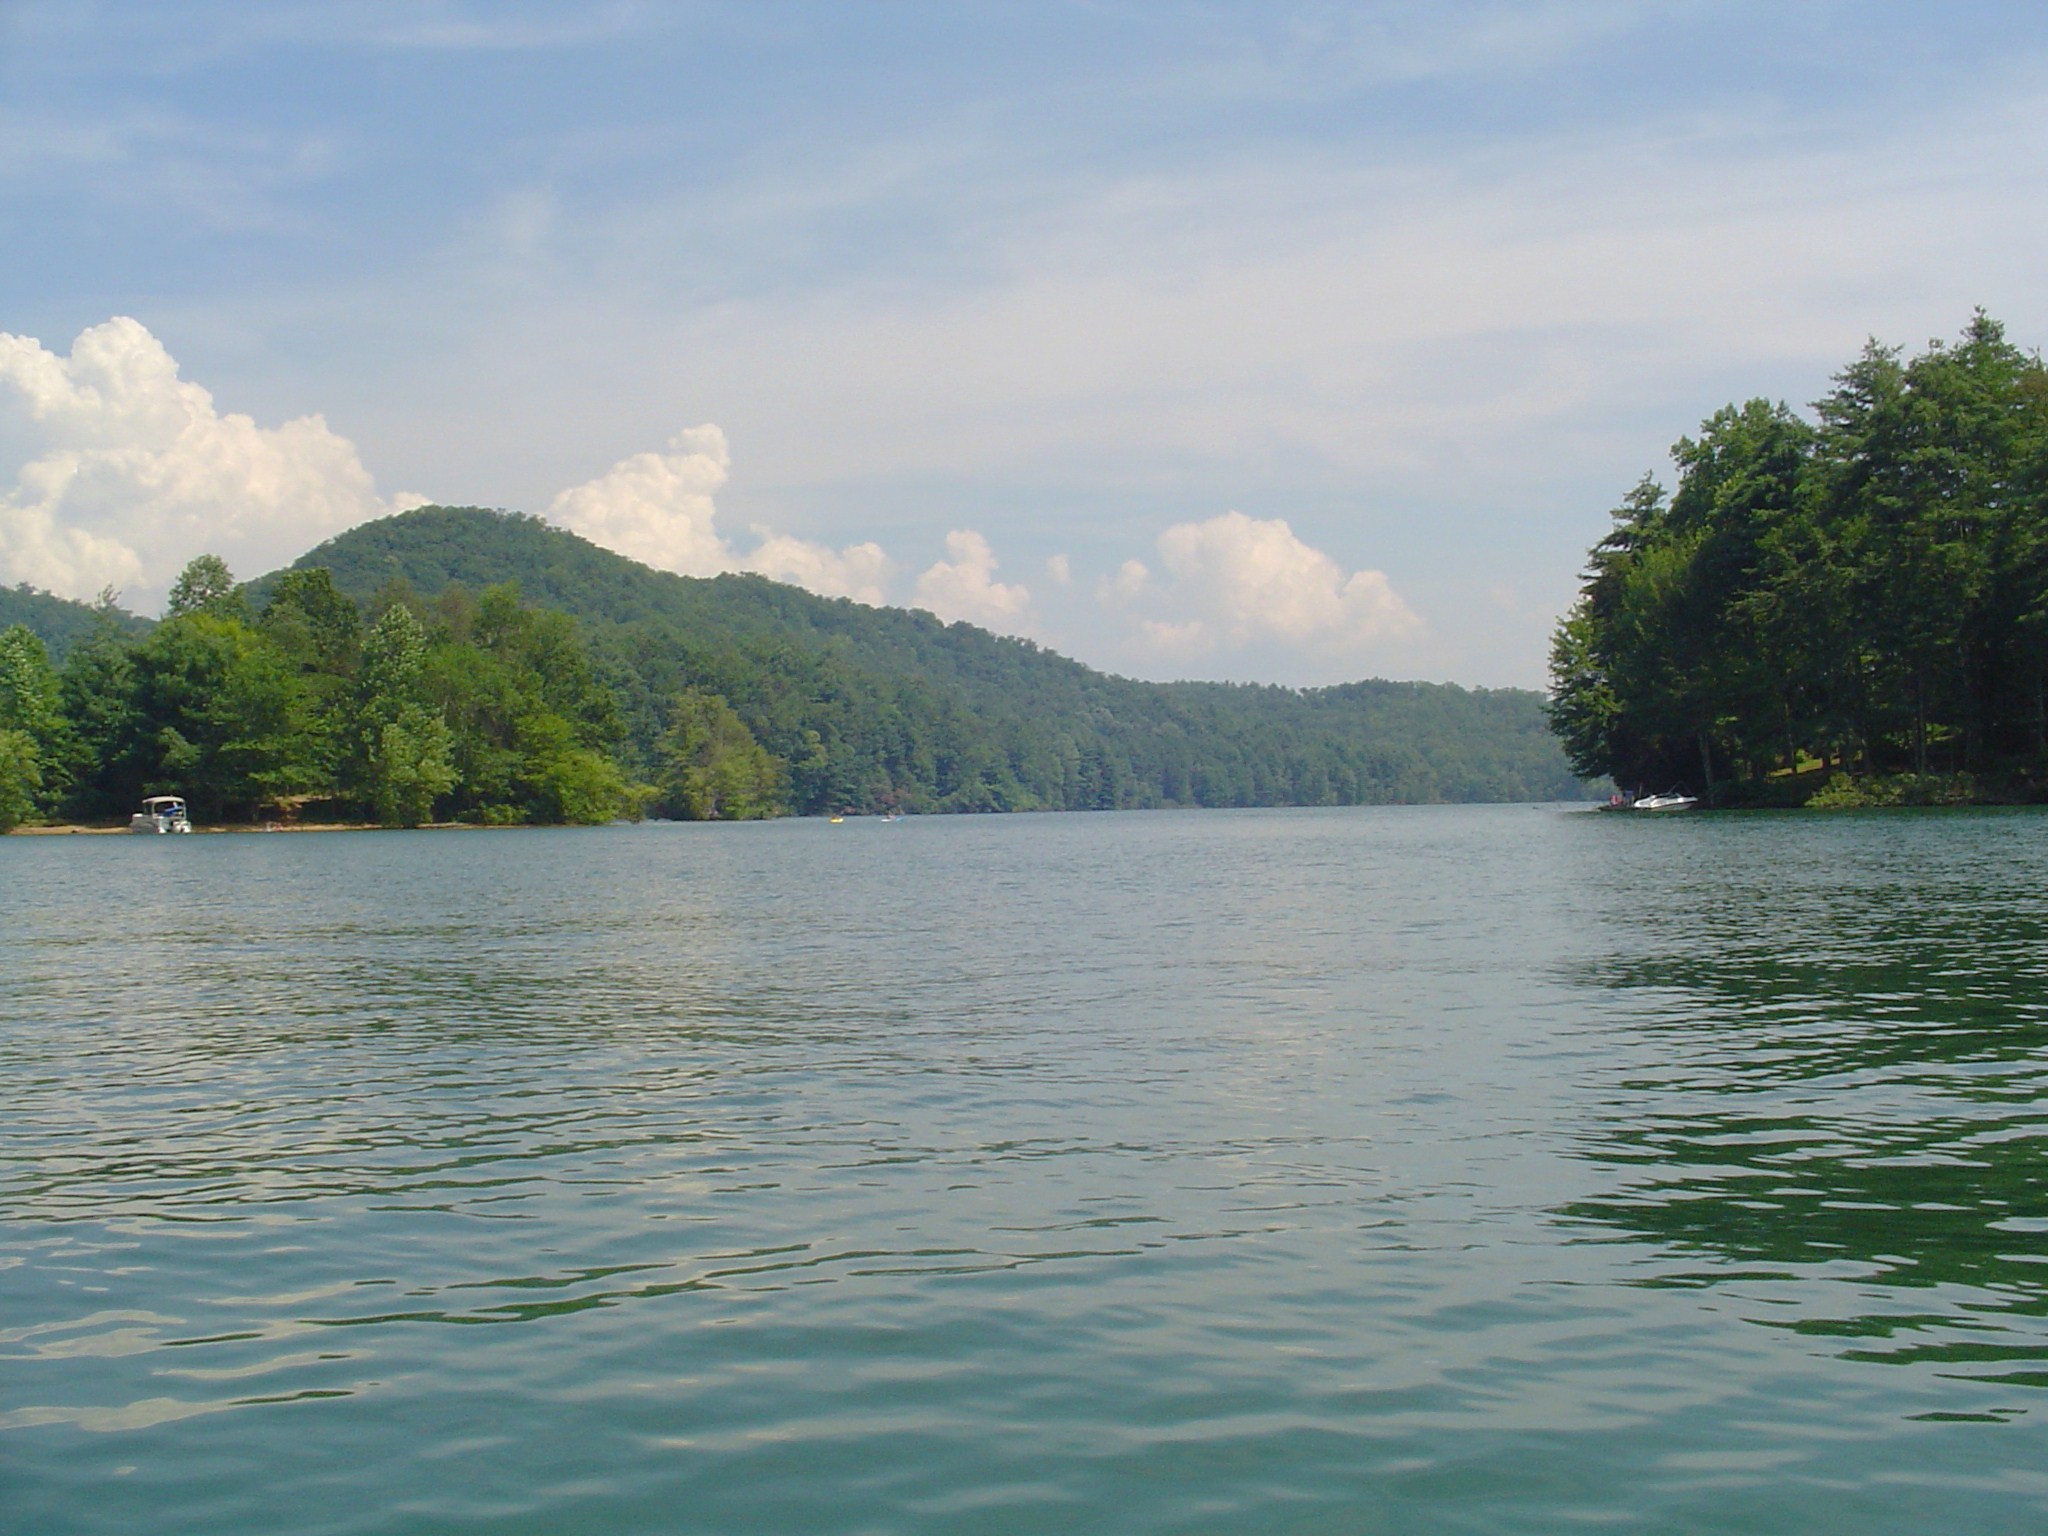 File:Lake Glenville North Carolina.jpg - Wikimedia Commons